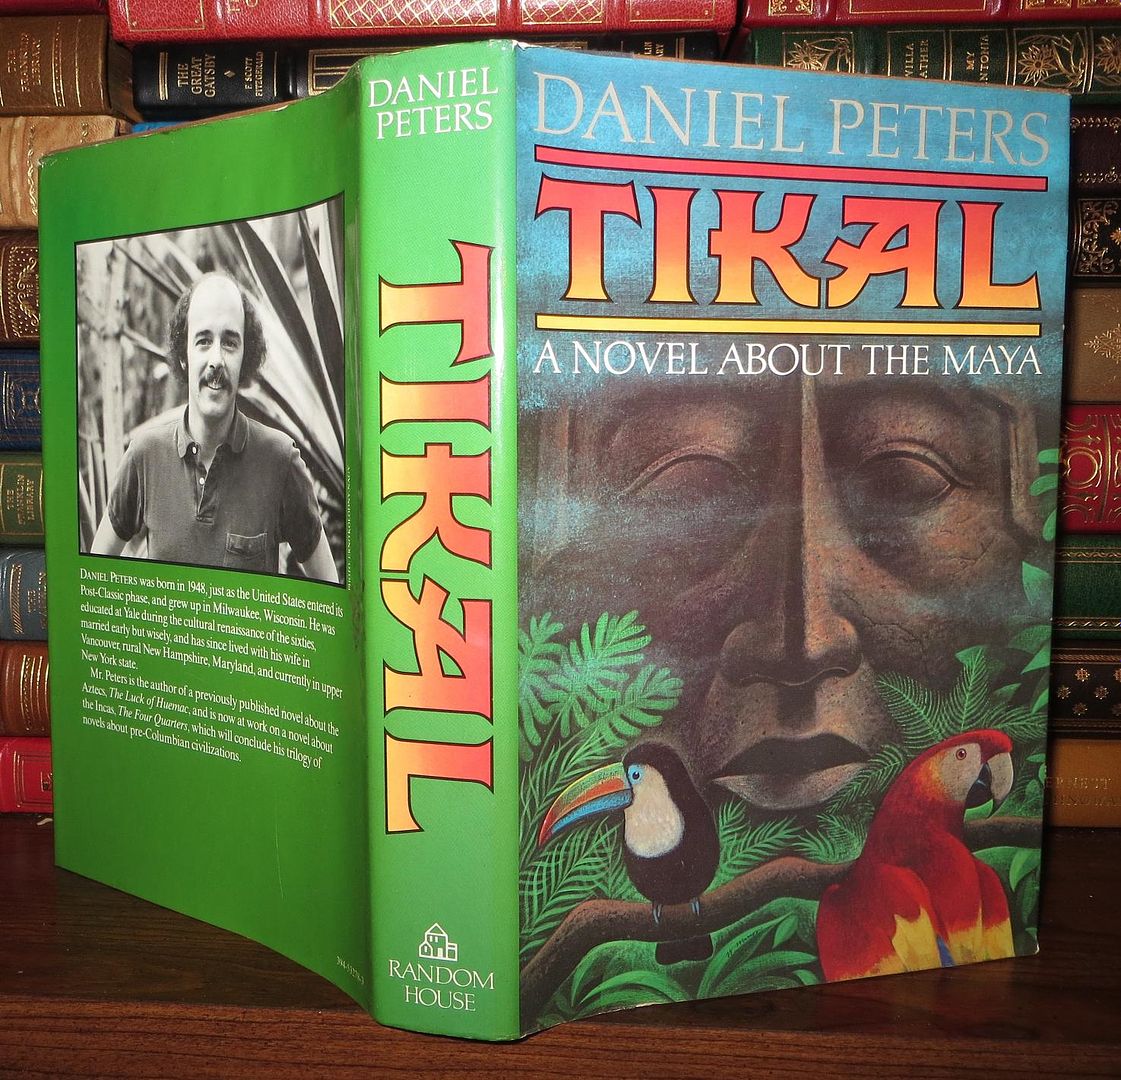 PETERS, DANIEL - Tikal